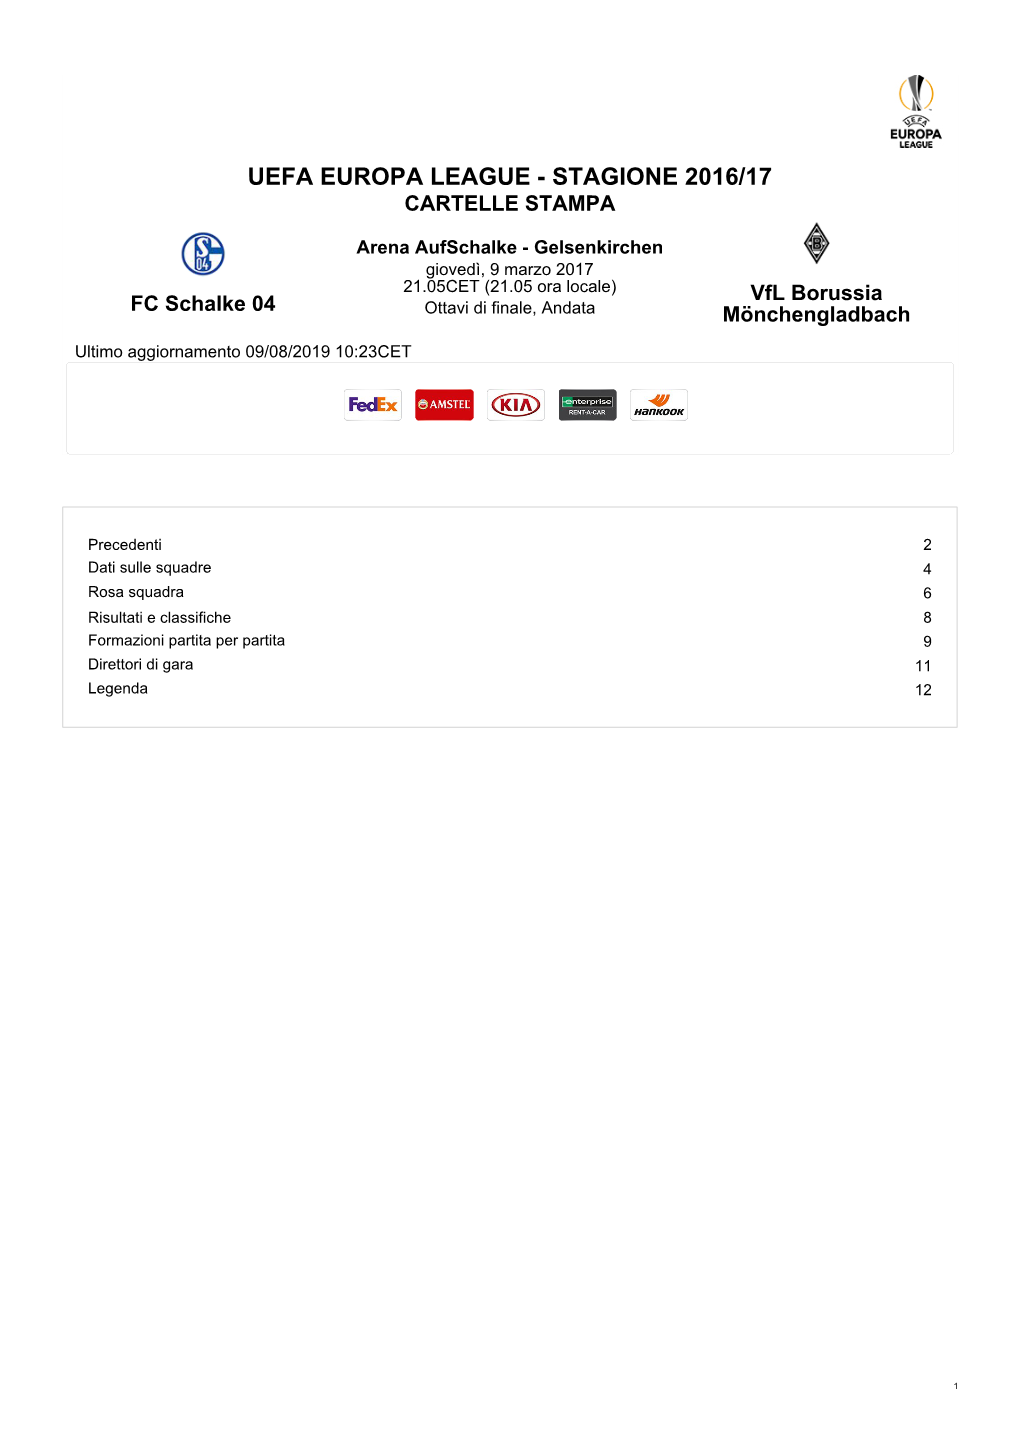 Uefa Europa League - Stagione 2016/17 Cartelle Stampa